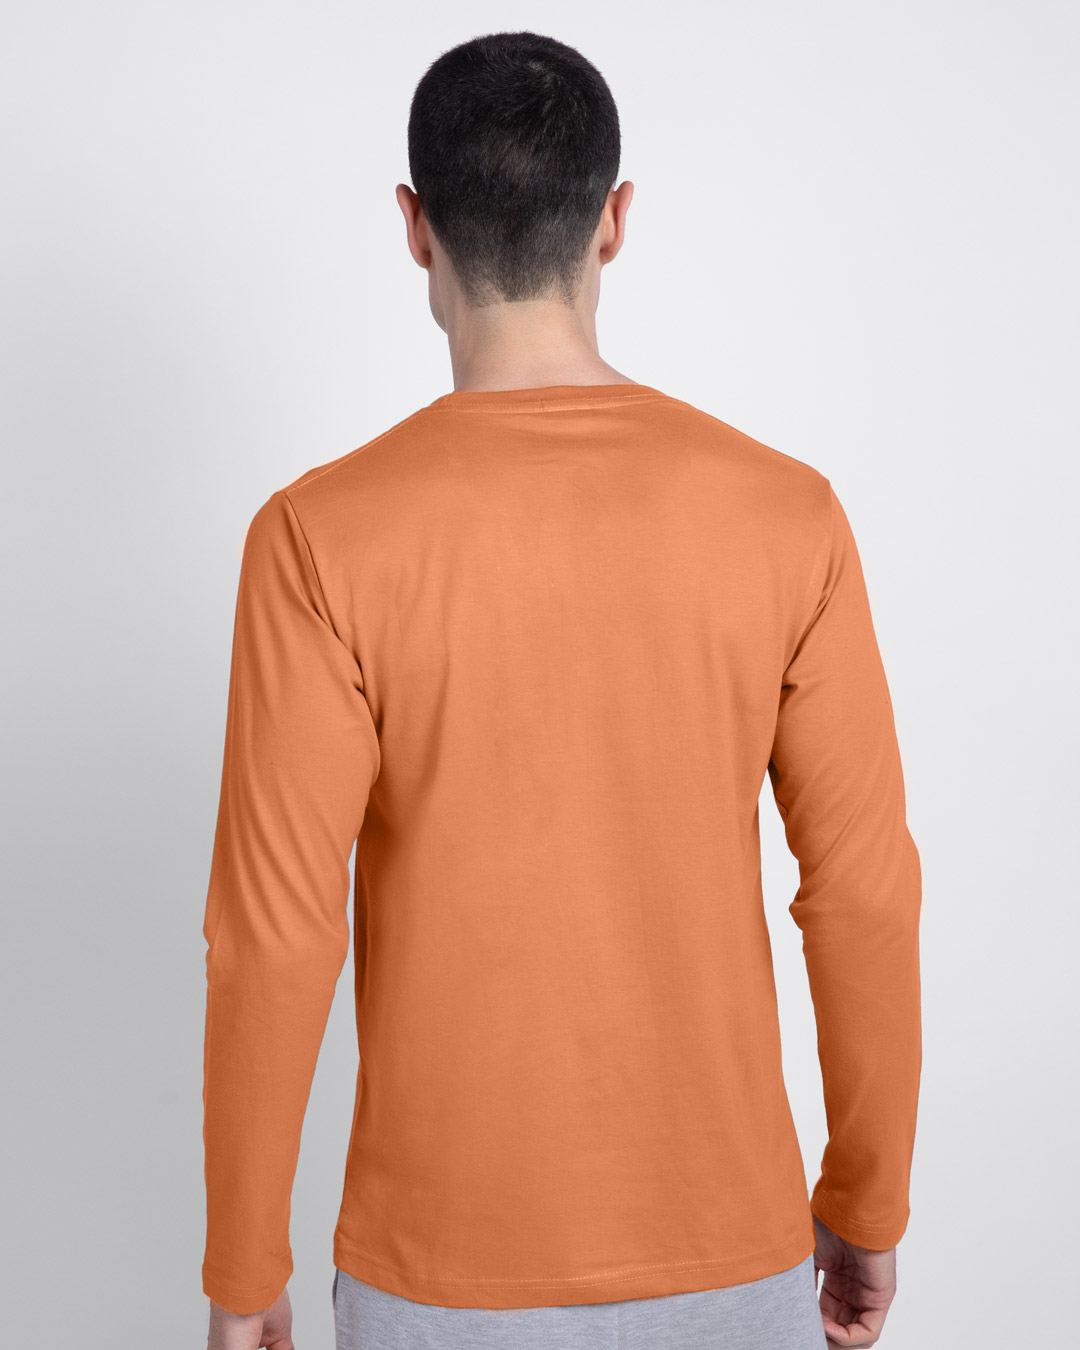 Shop Nir vah nuh Full Sleeve T-Shirt Vintage Orange -Back